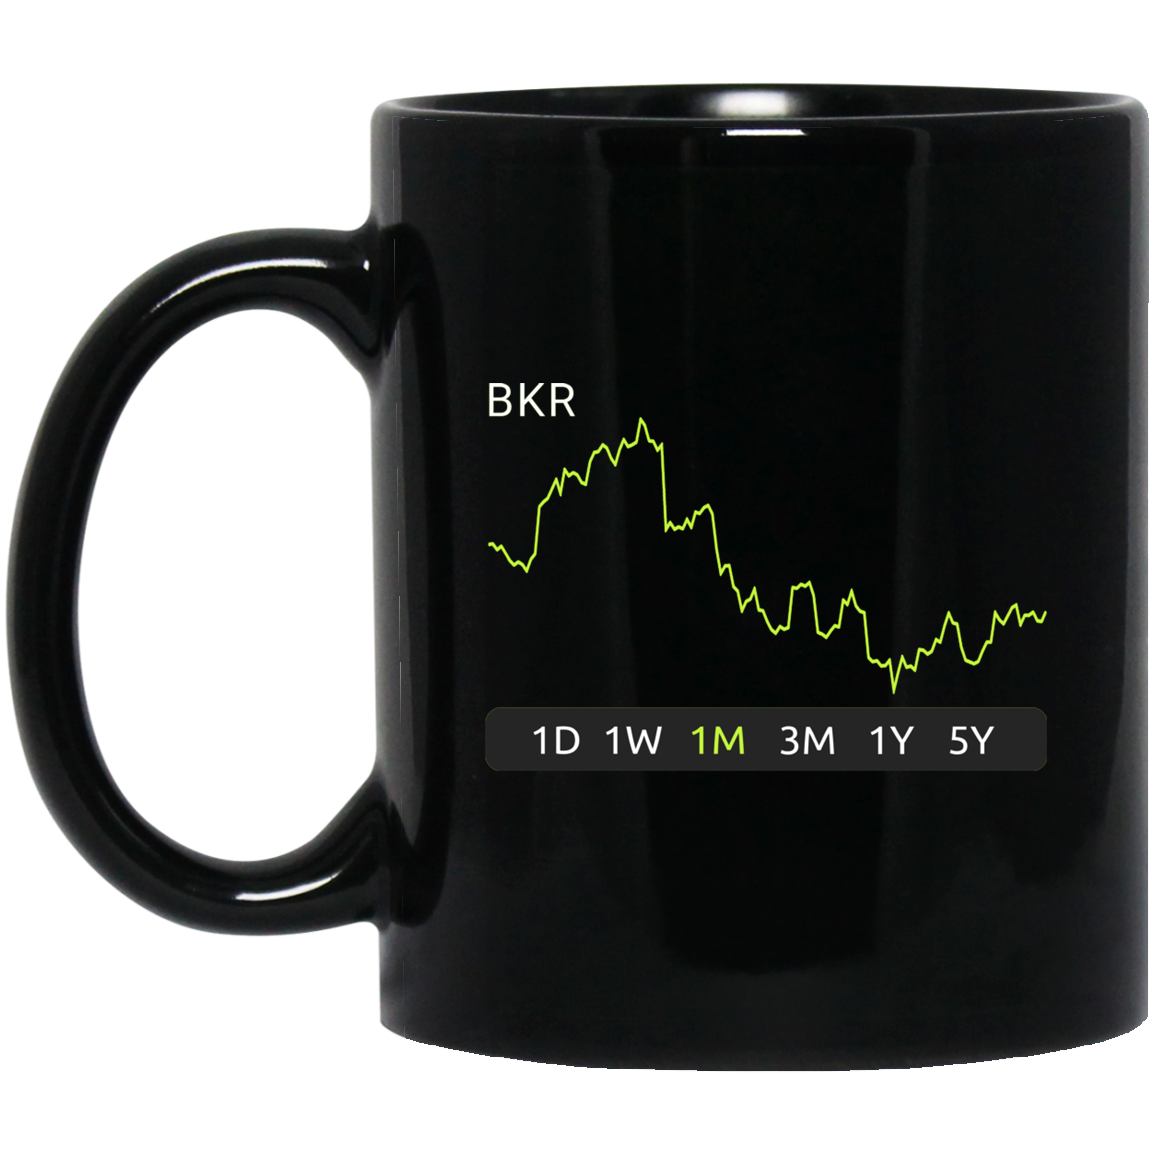 BKR Stock 1m Mug